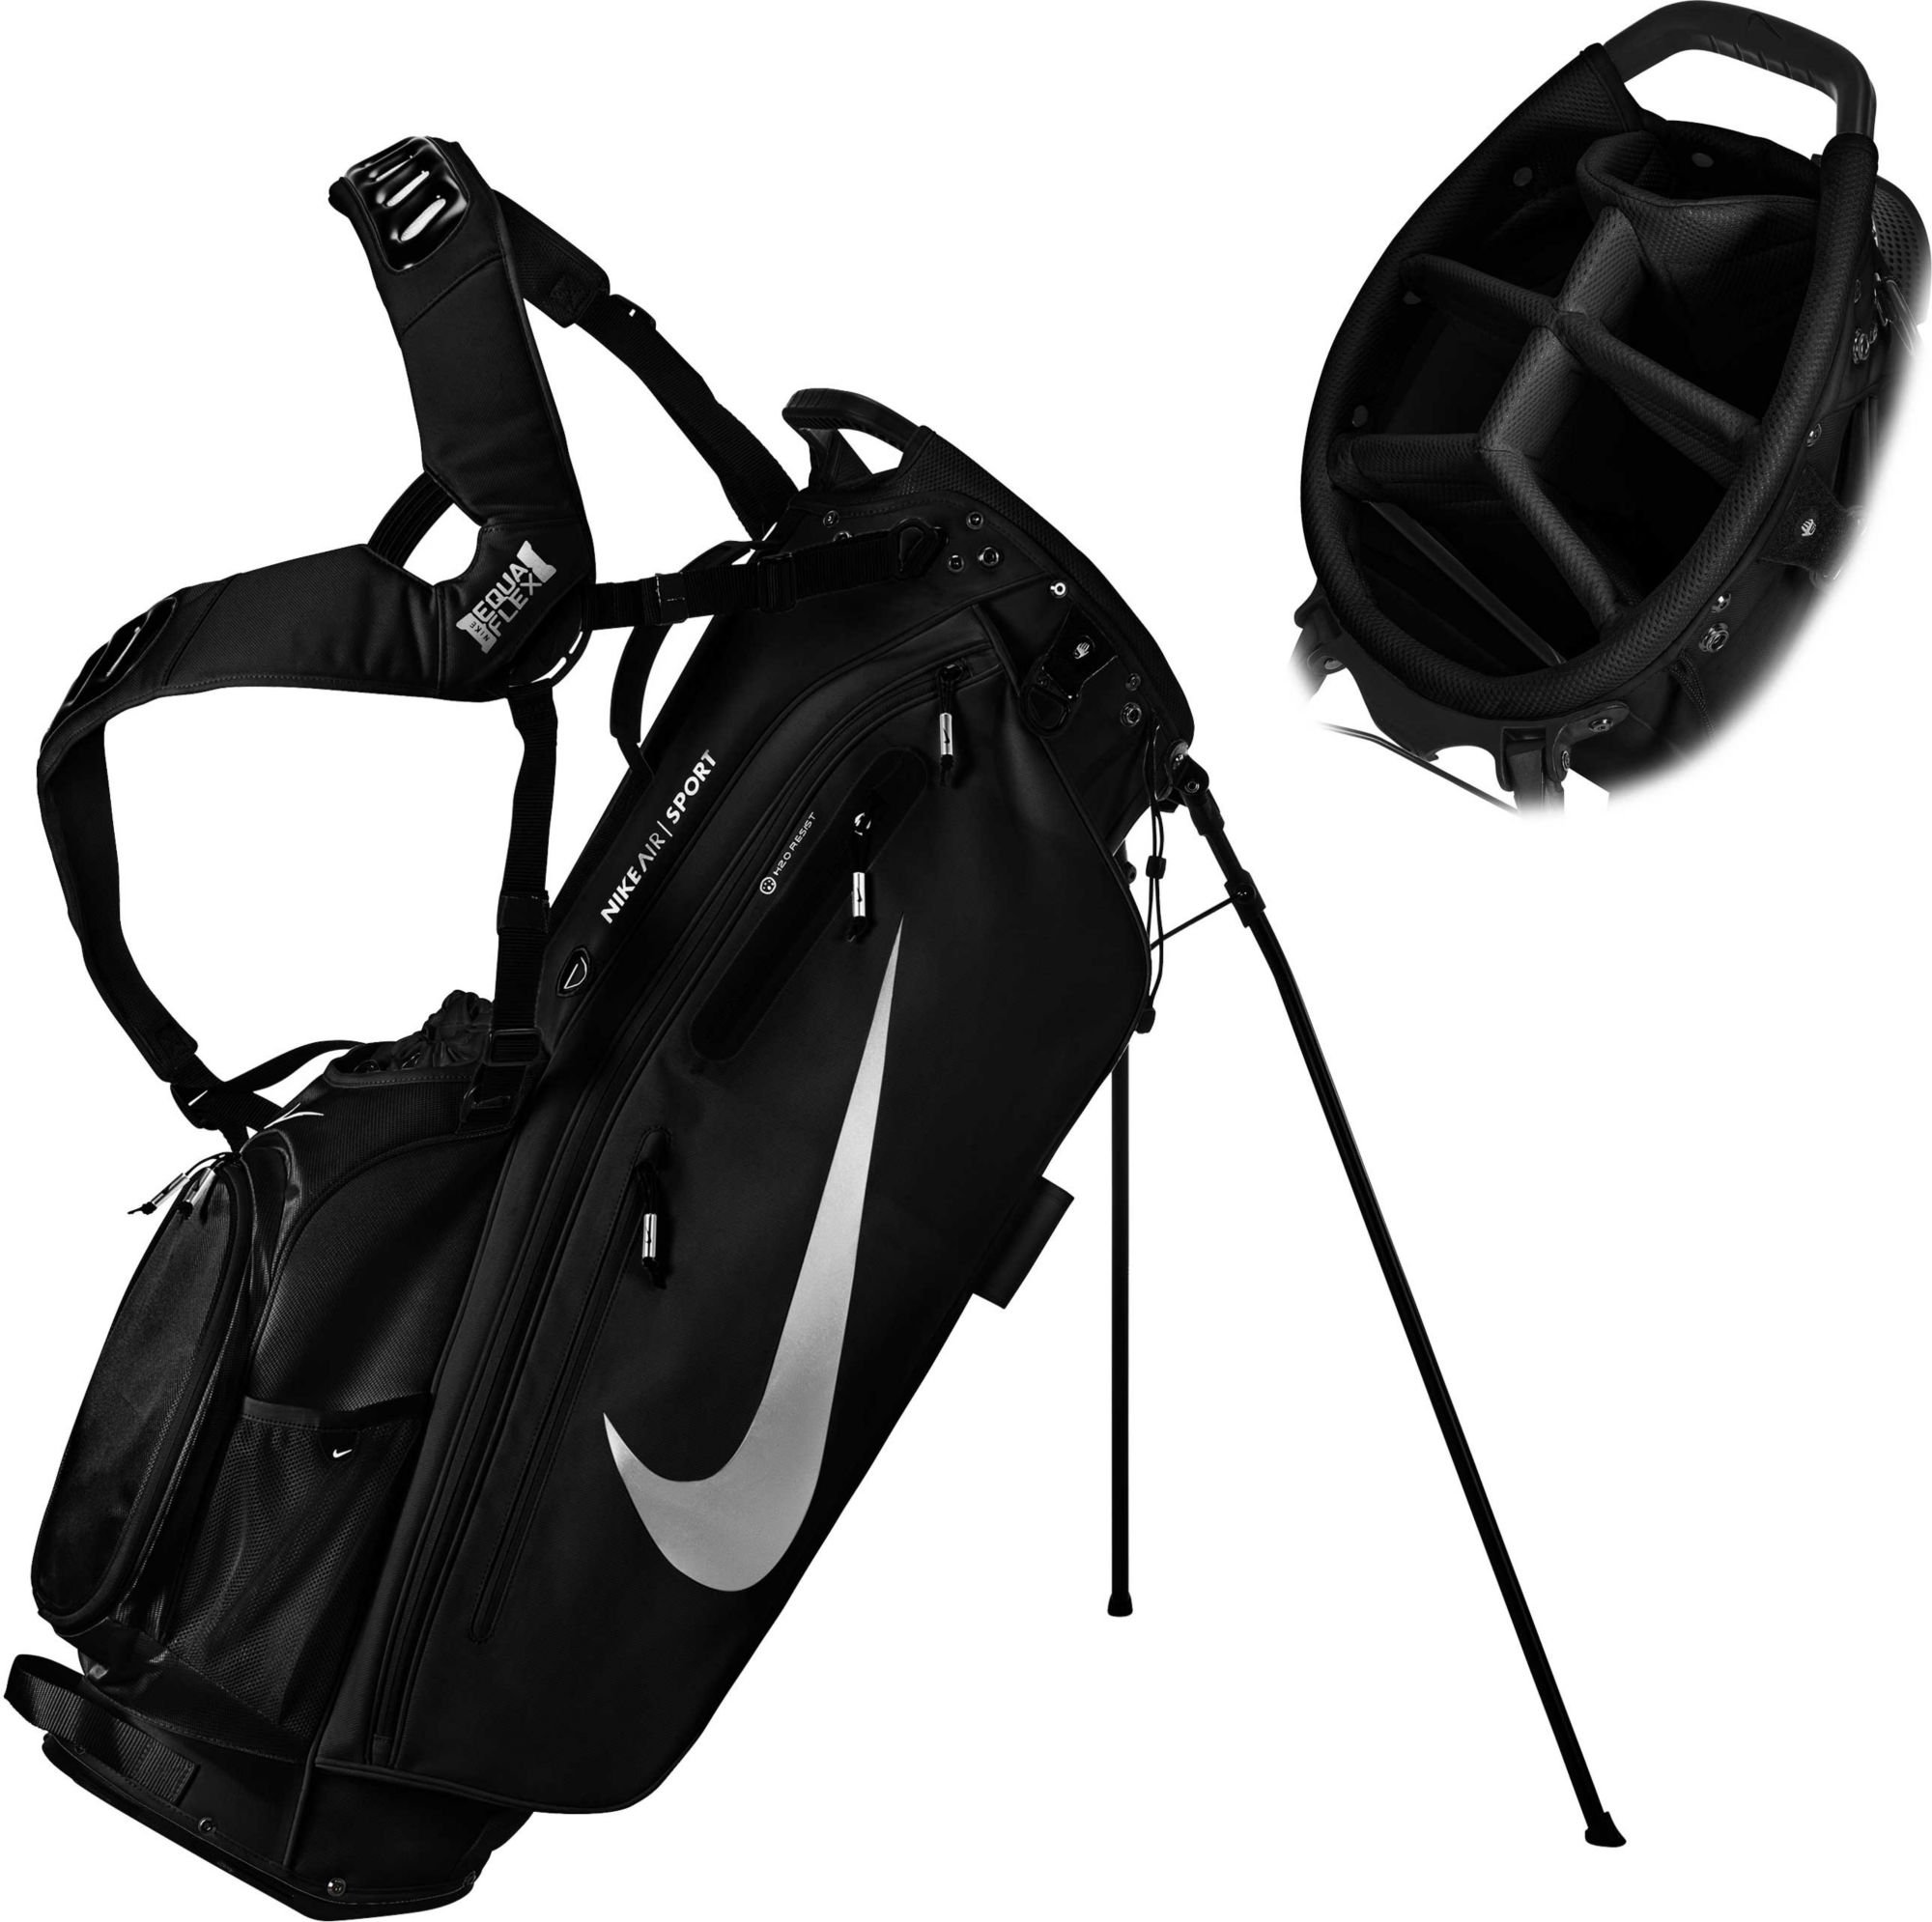 nike golf air hybrid stand bag 2020